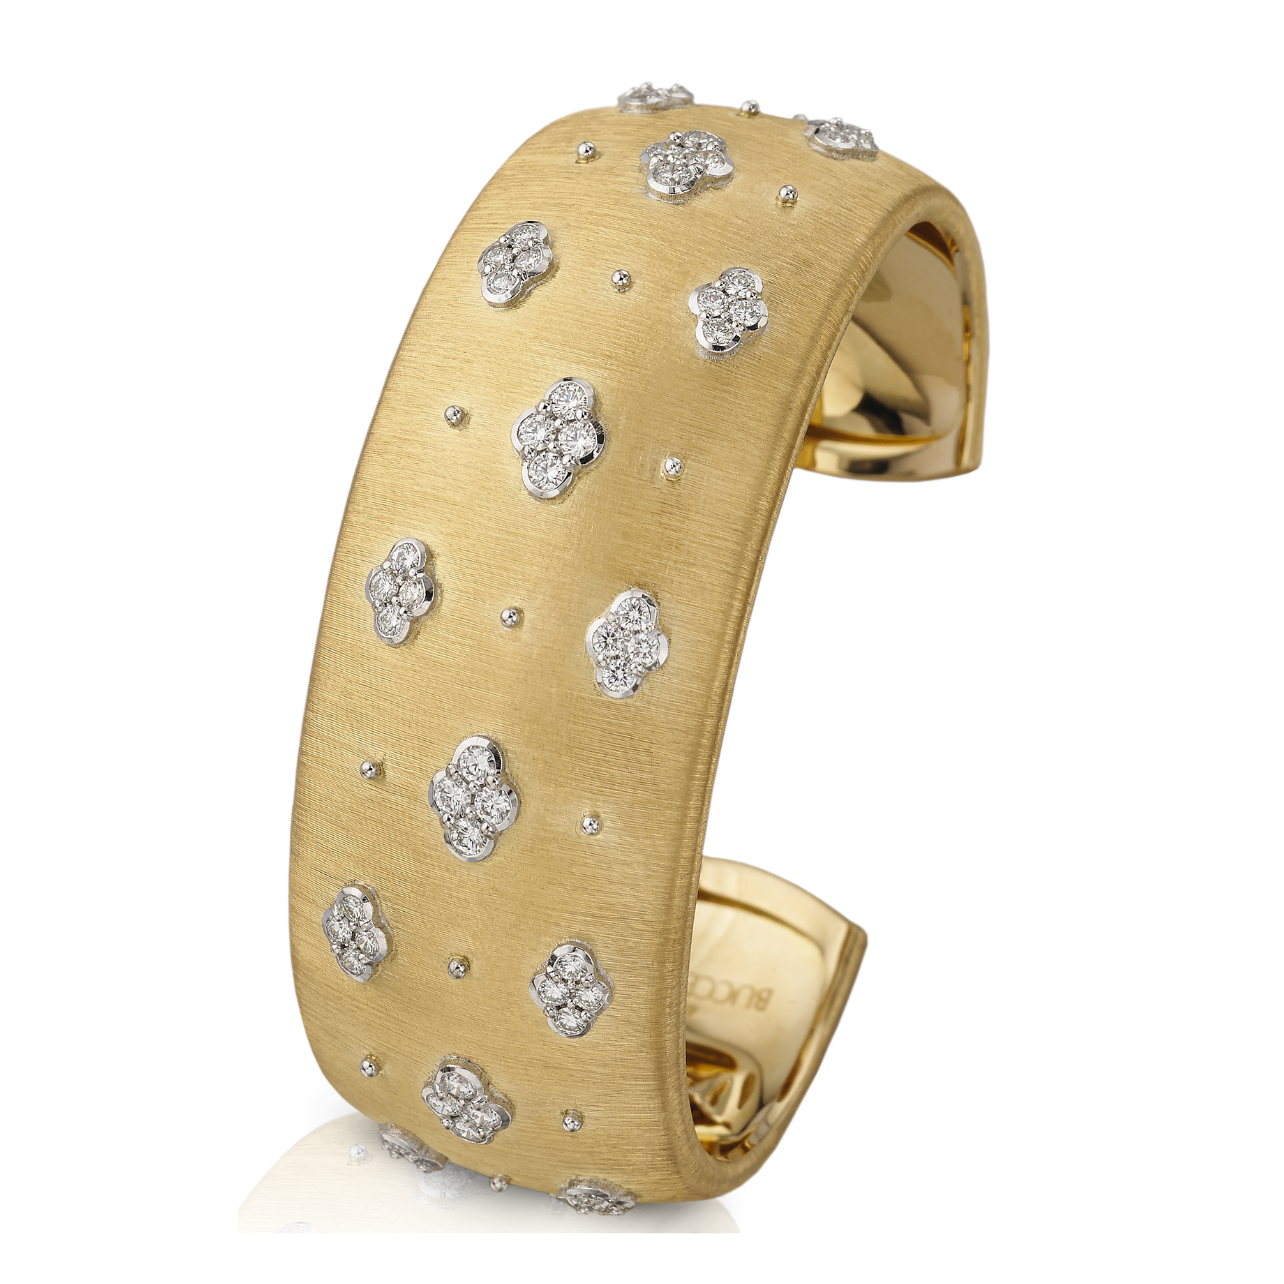 Buccellati Macri AB collection bracelet in yellow gold with diamonds